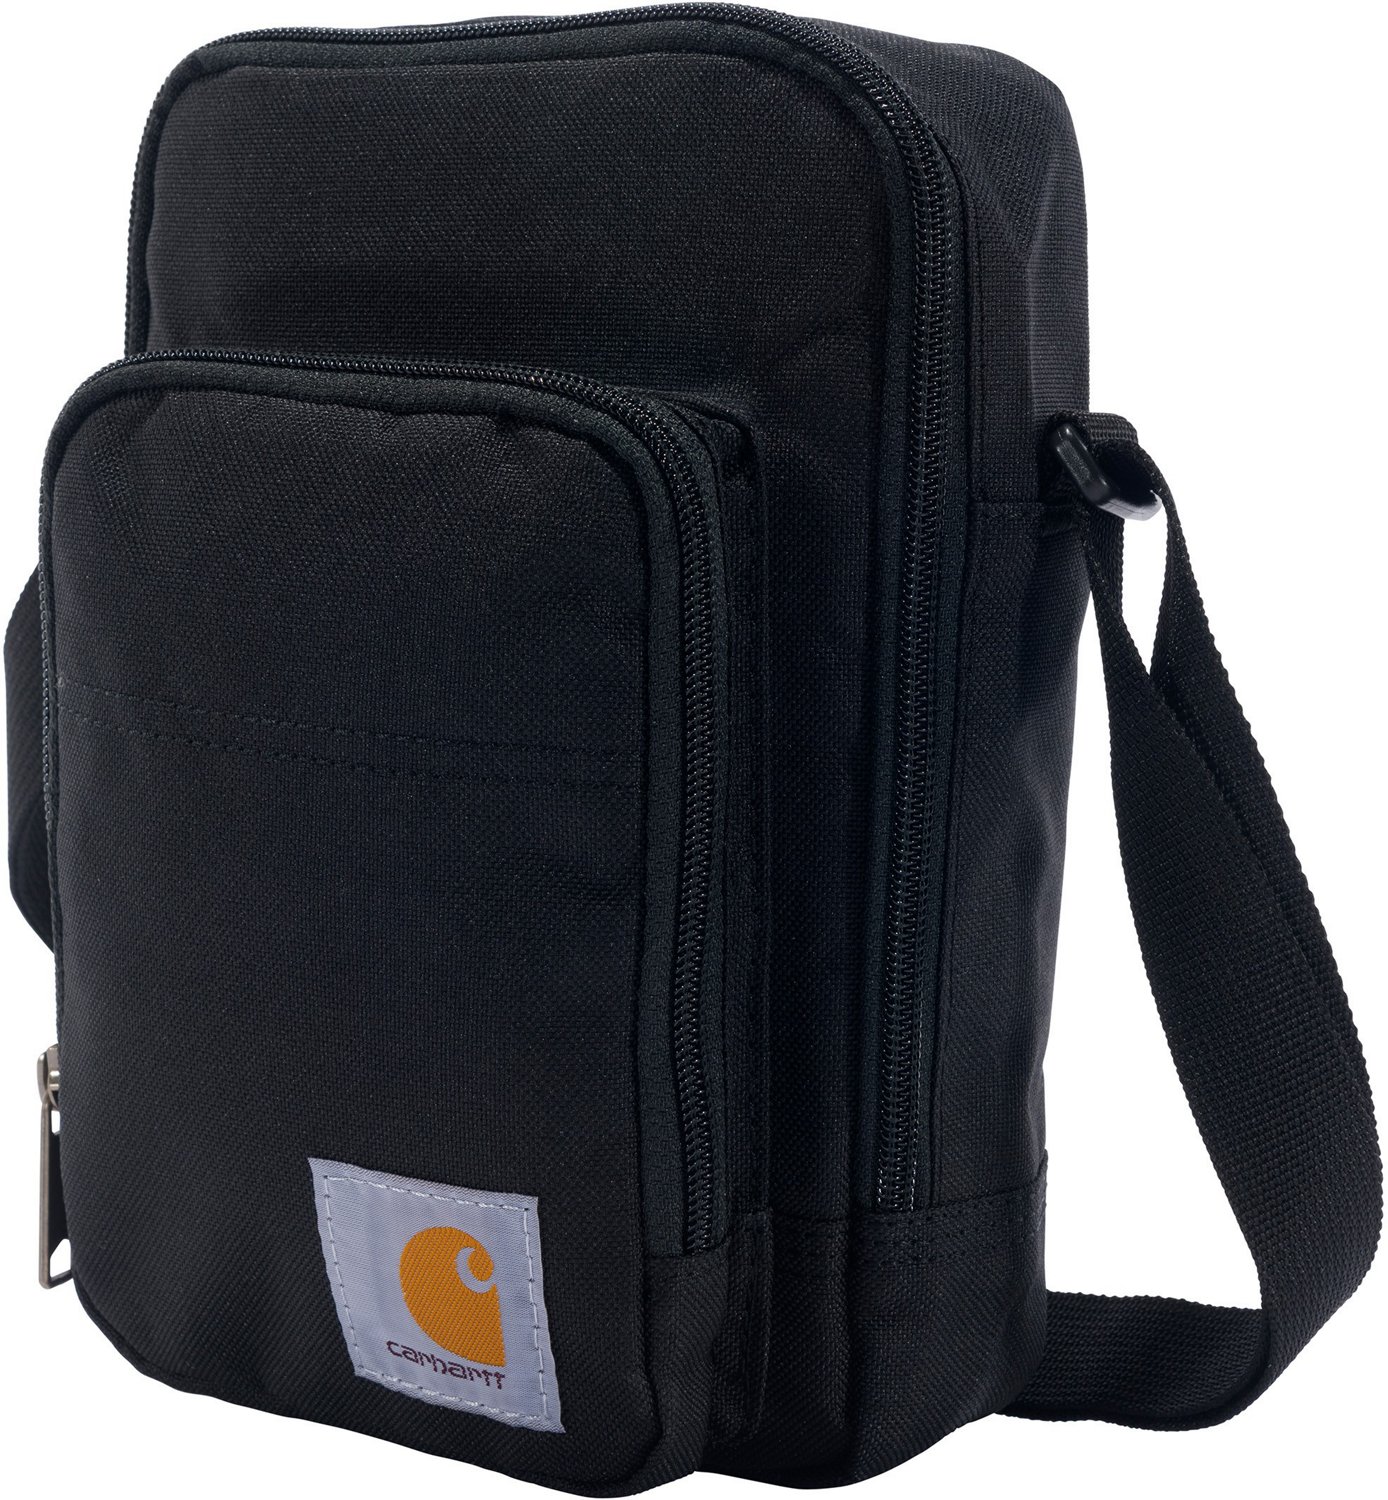 Carhartt Crossbody Zip Bag | Free Shipping at Academy